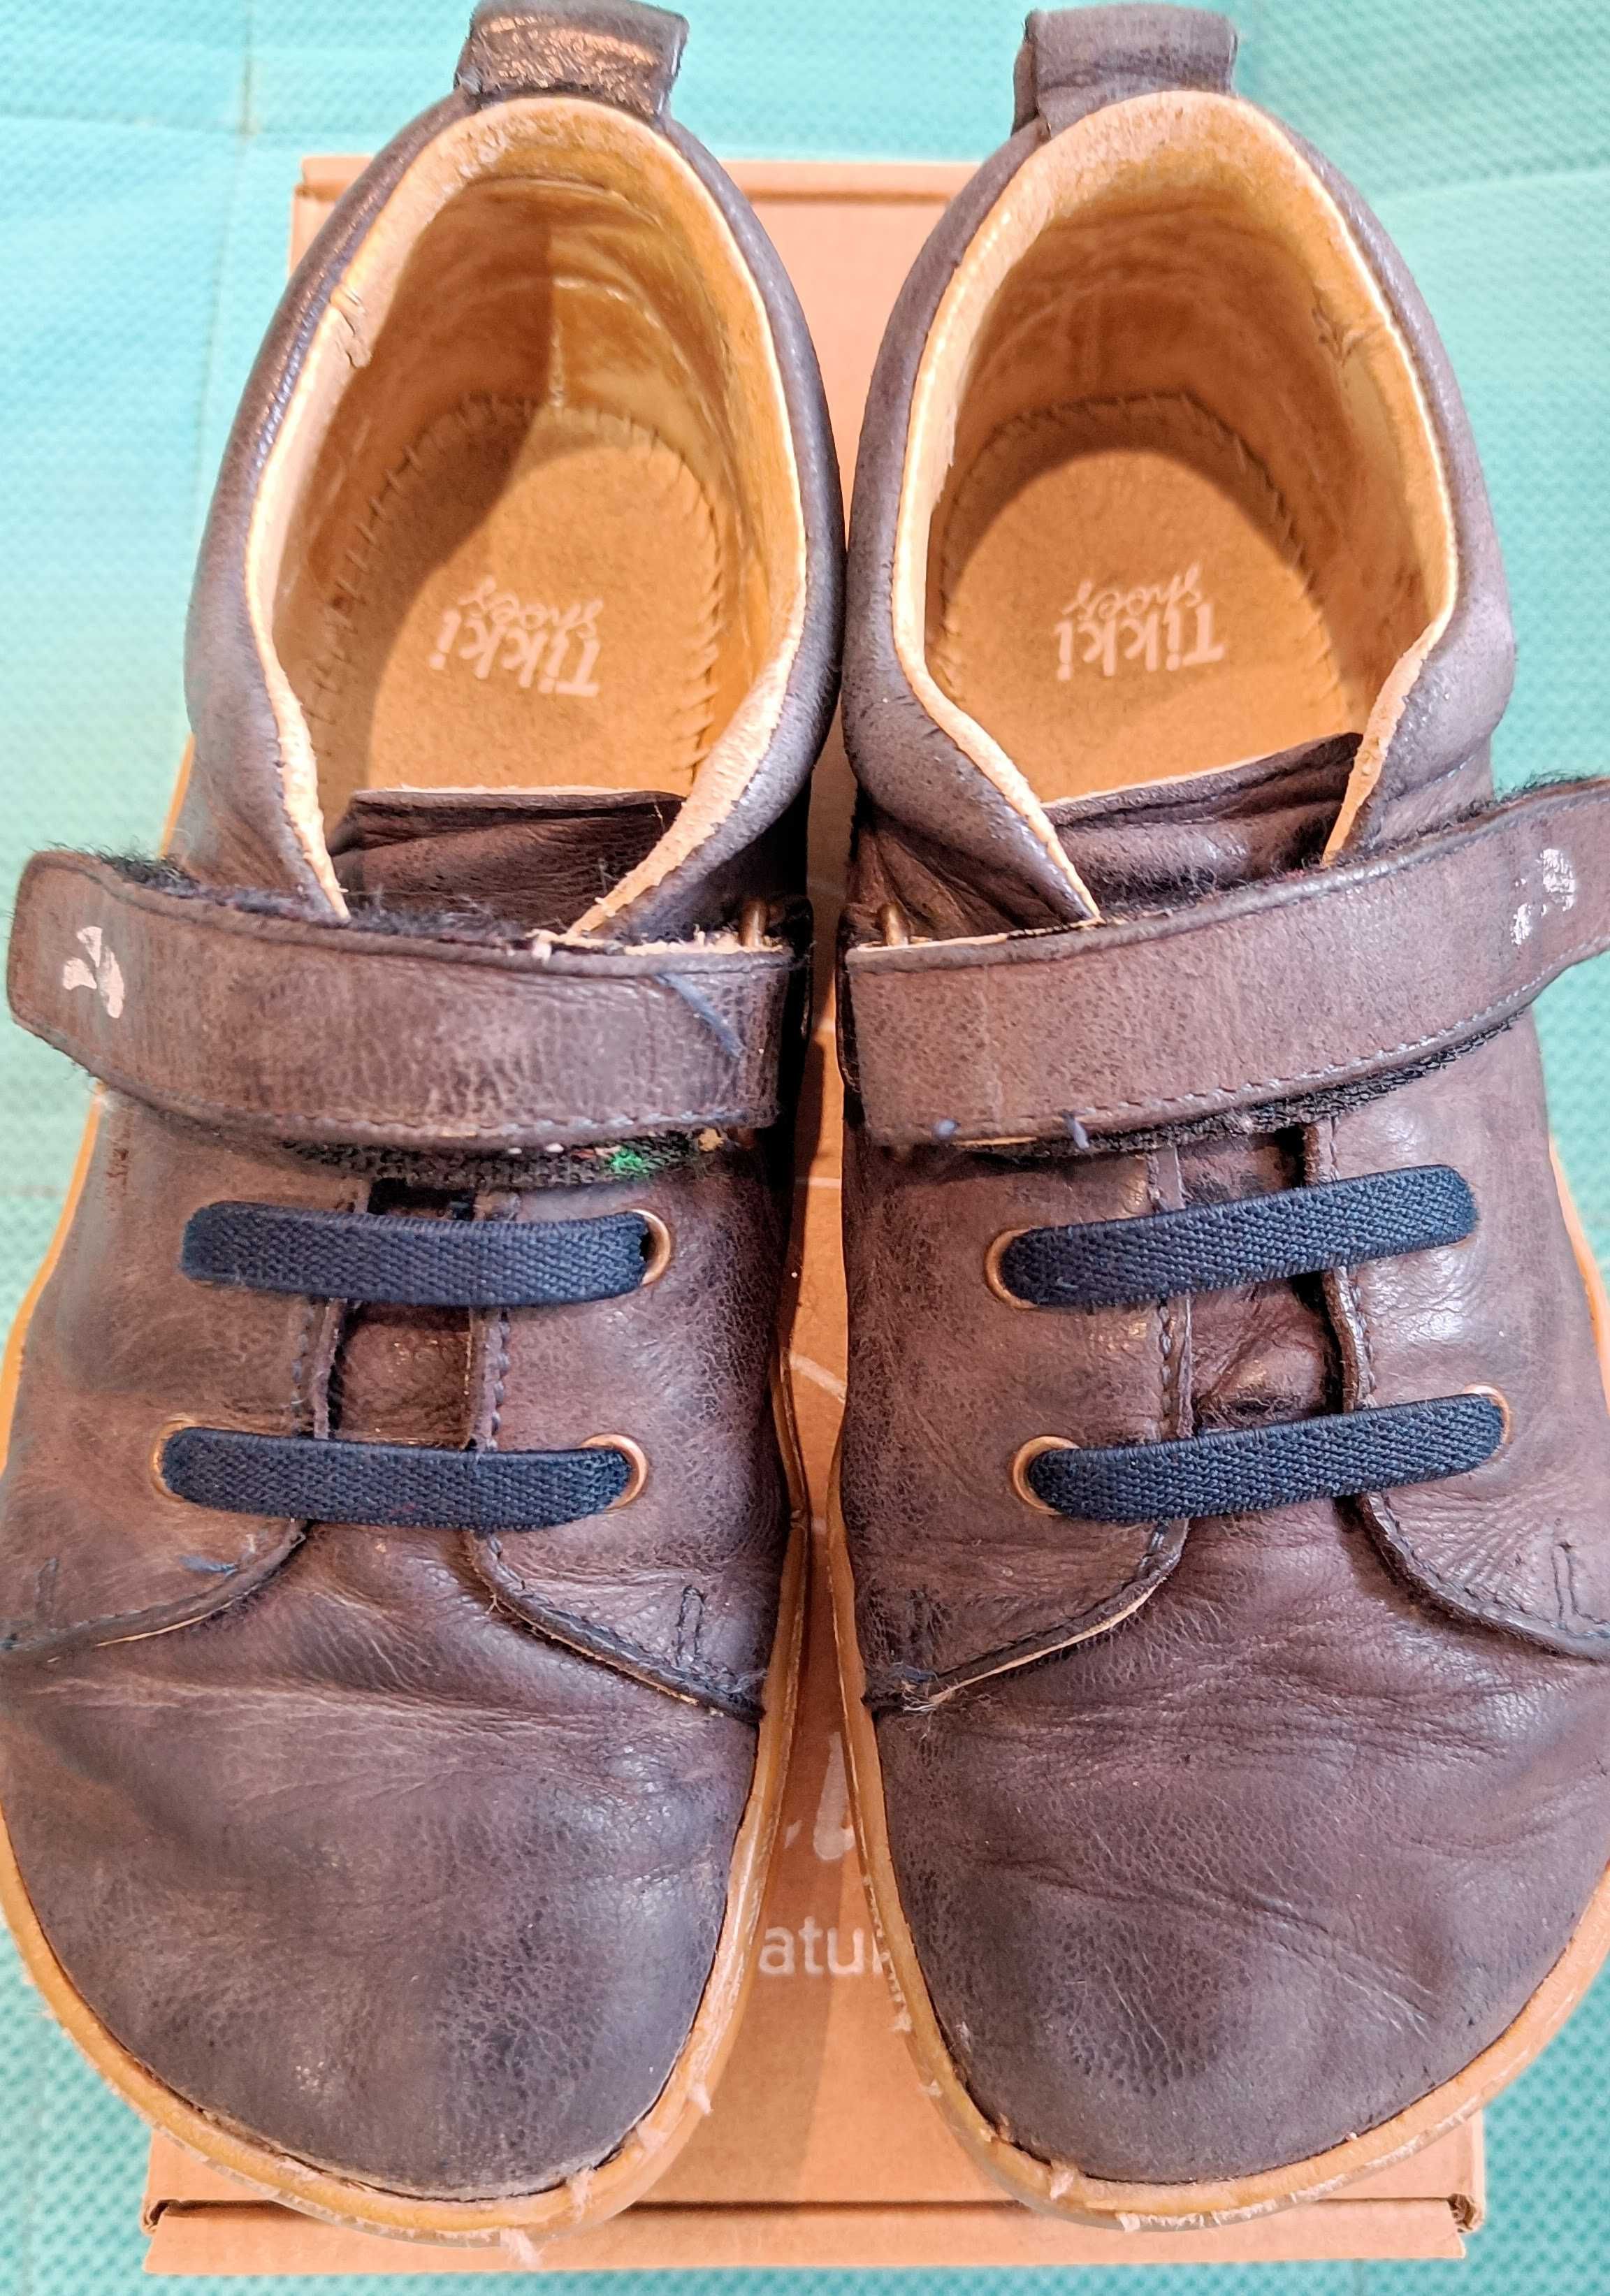 Детски боси обувки Tikki HARLEQUIN Leather, размер 30